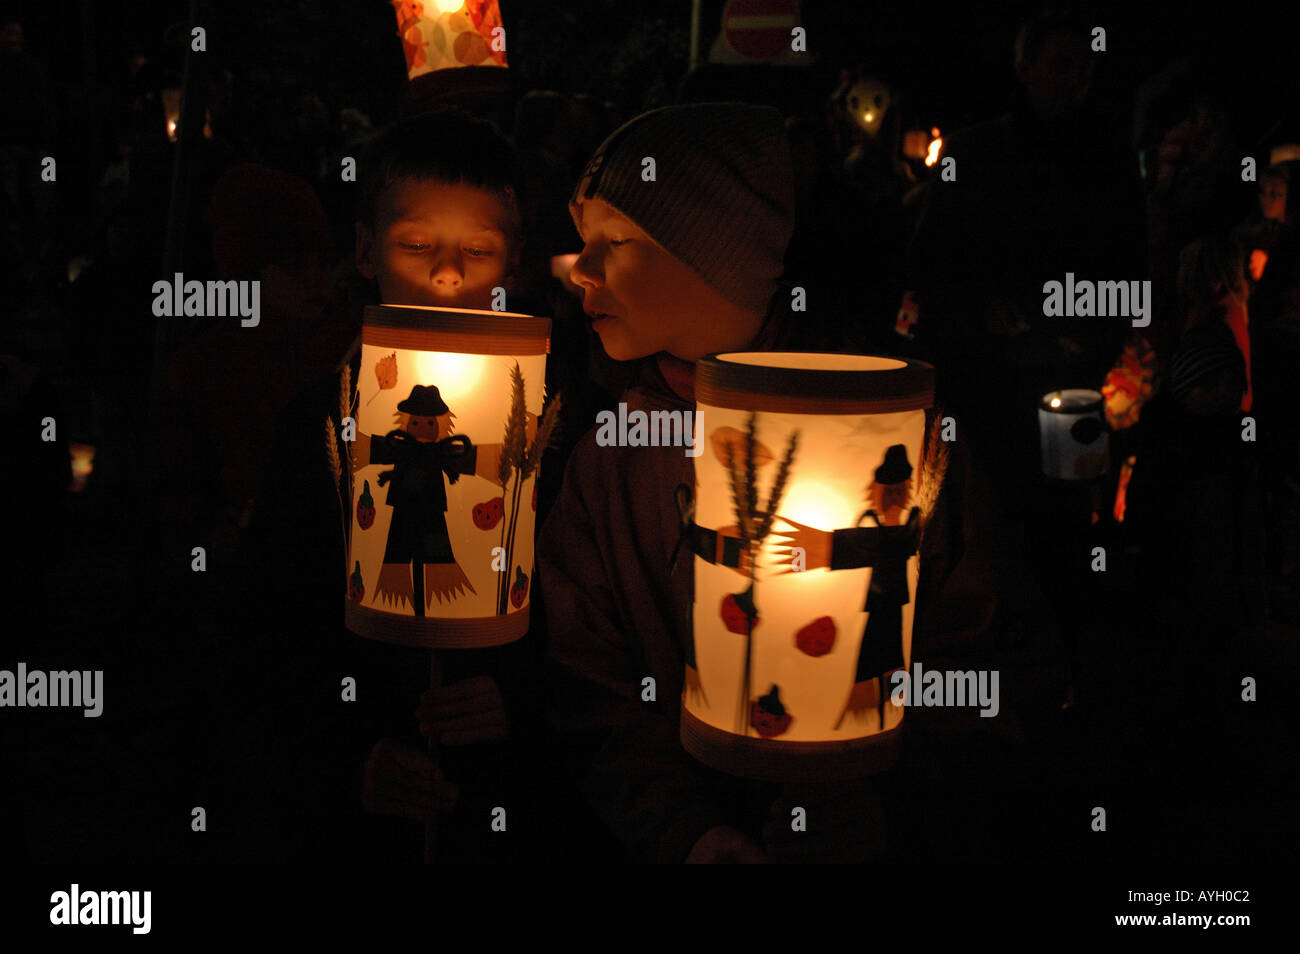 St martins parade fotografías e imágenes de alta resolución - Alamy